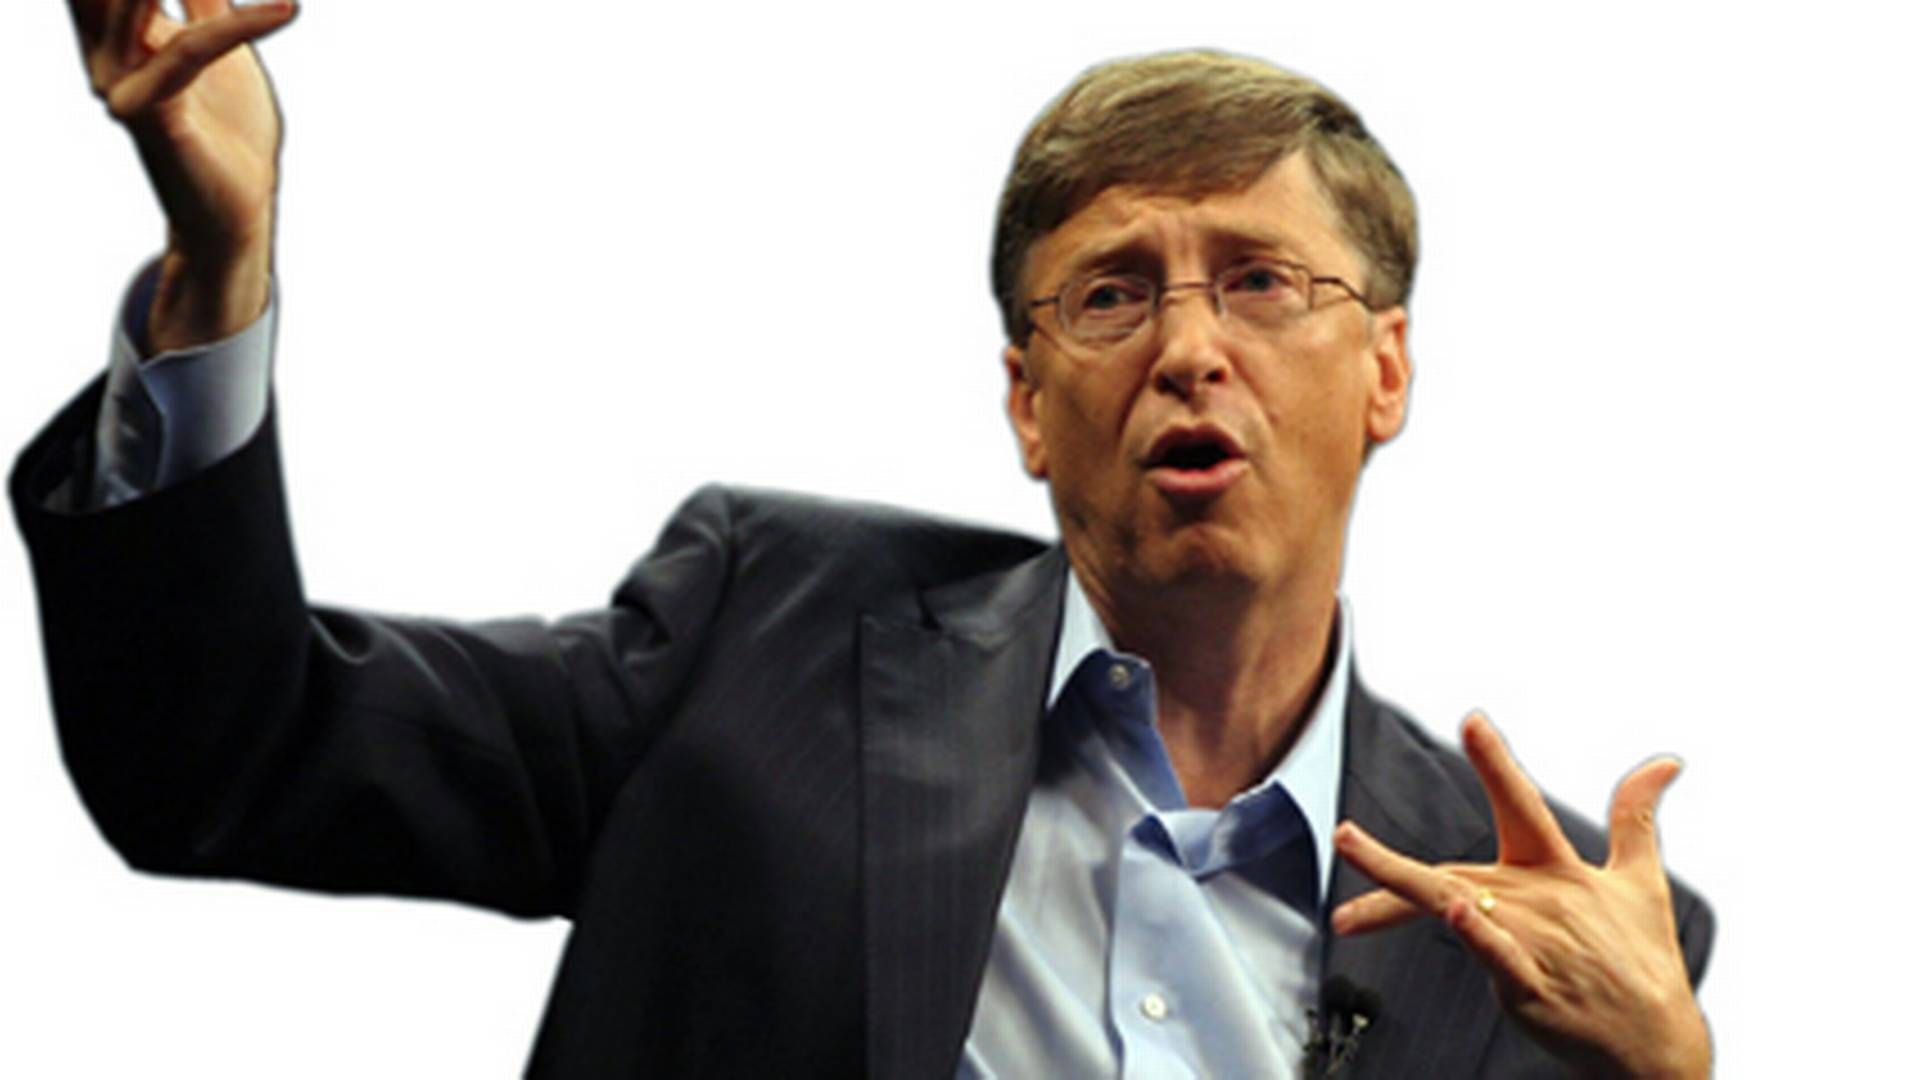 Bill Gates er tilbage som verdens rigeste.